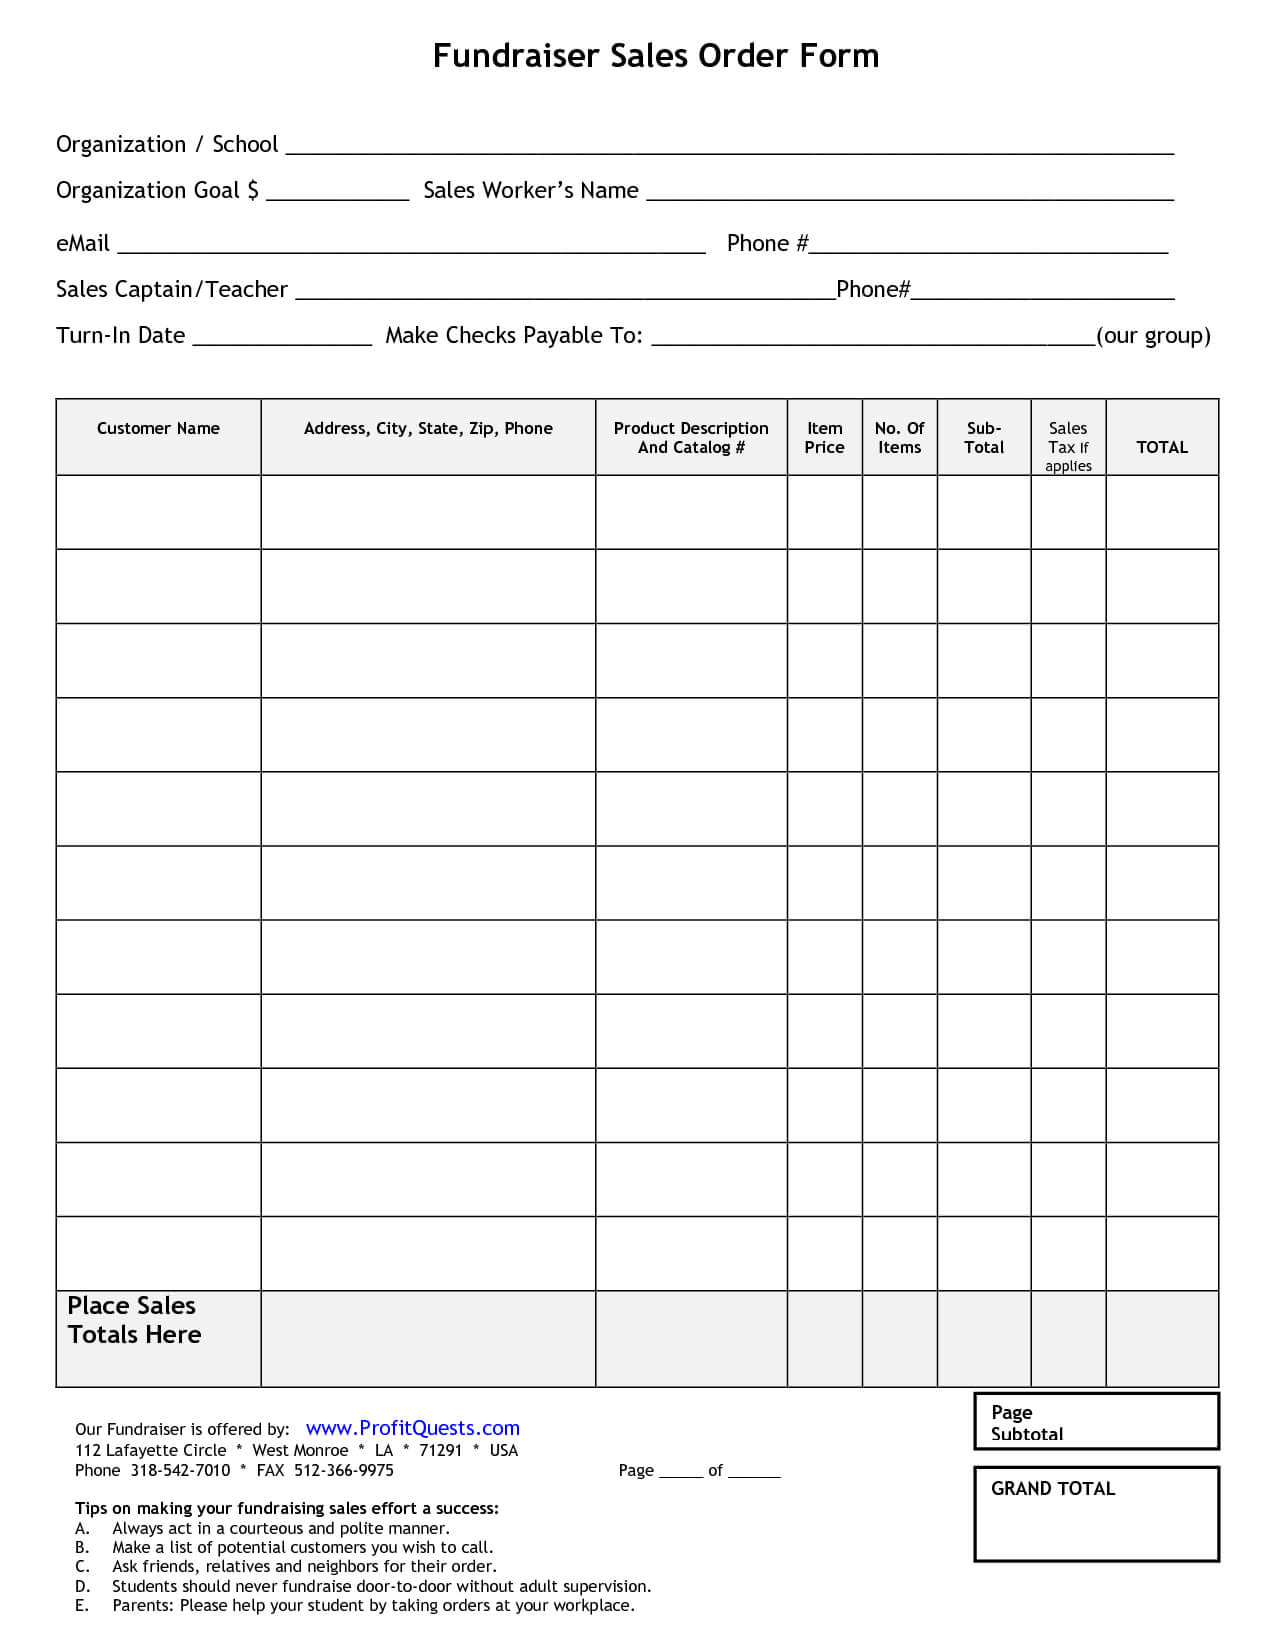 Fundraiser Order Form | Fundraiser Order Form Template Within Blank Fundraiser Order Form Template